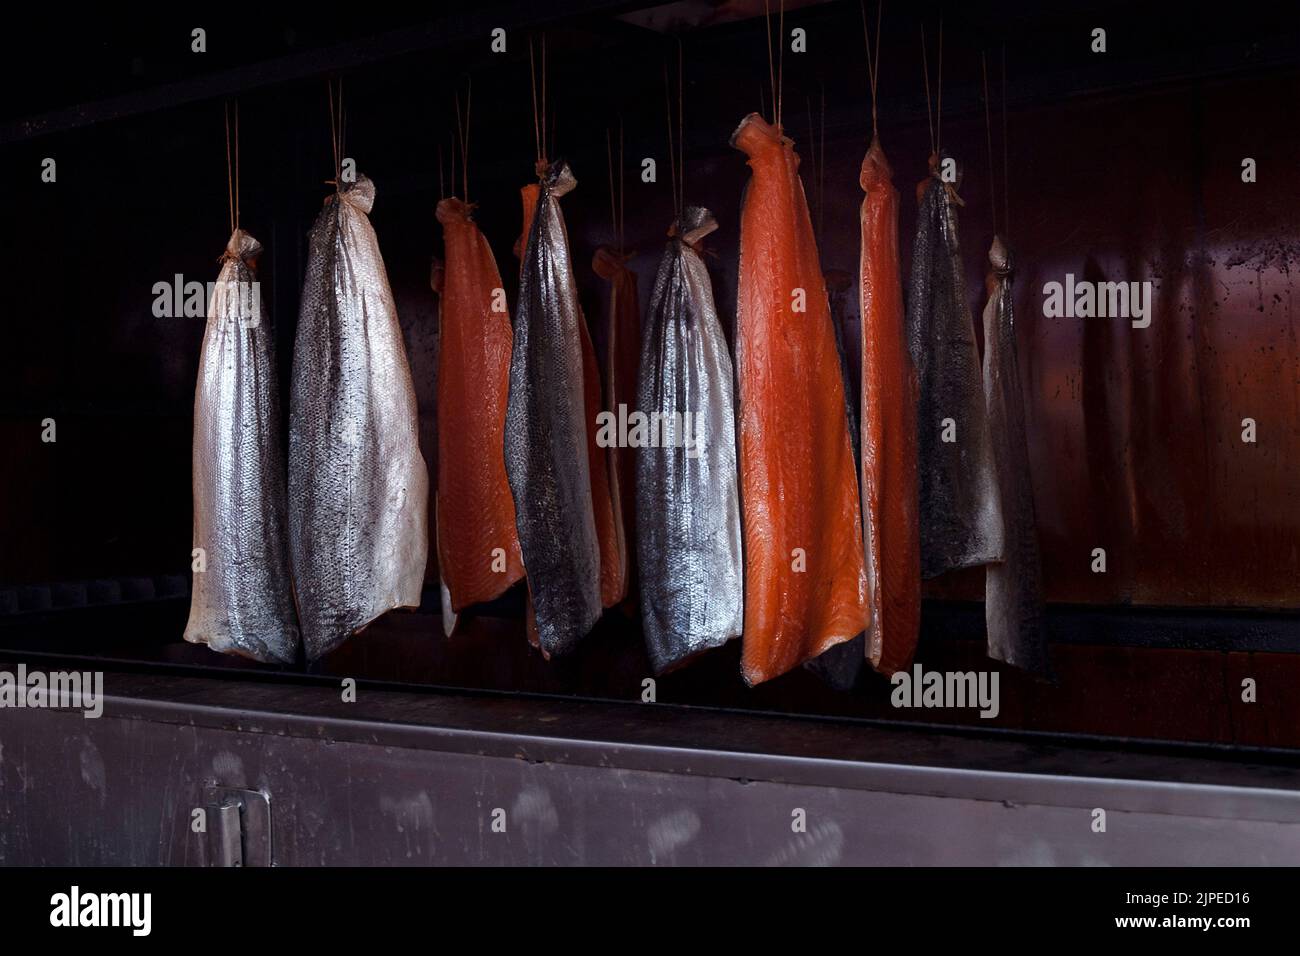 Salmon fish hanging in smokehouse. Smoked fish, traditional way of fish preserving. Stock Photo